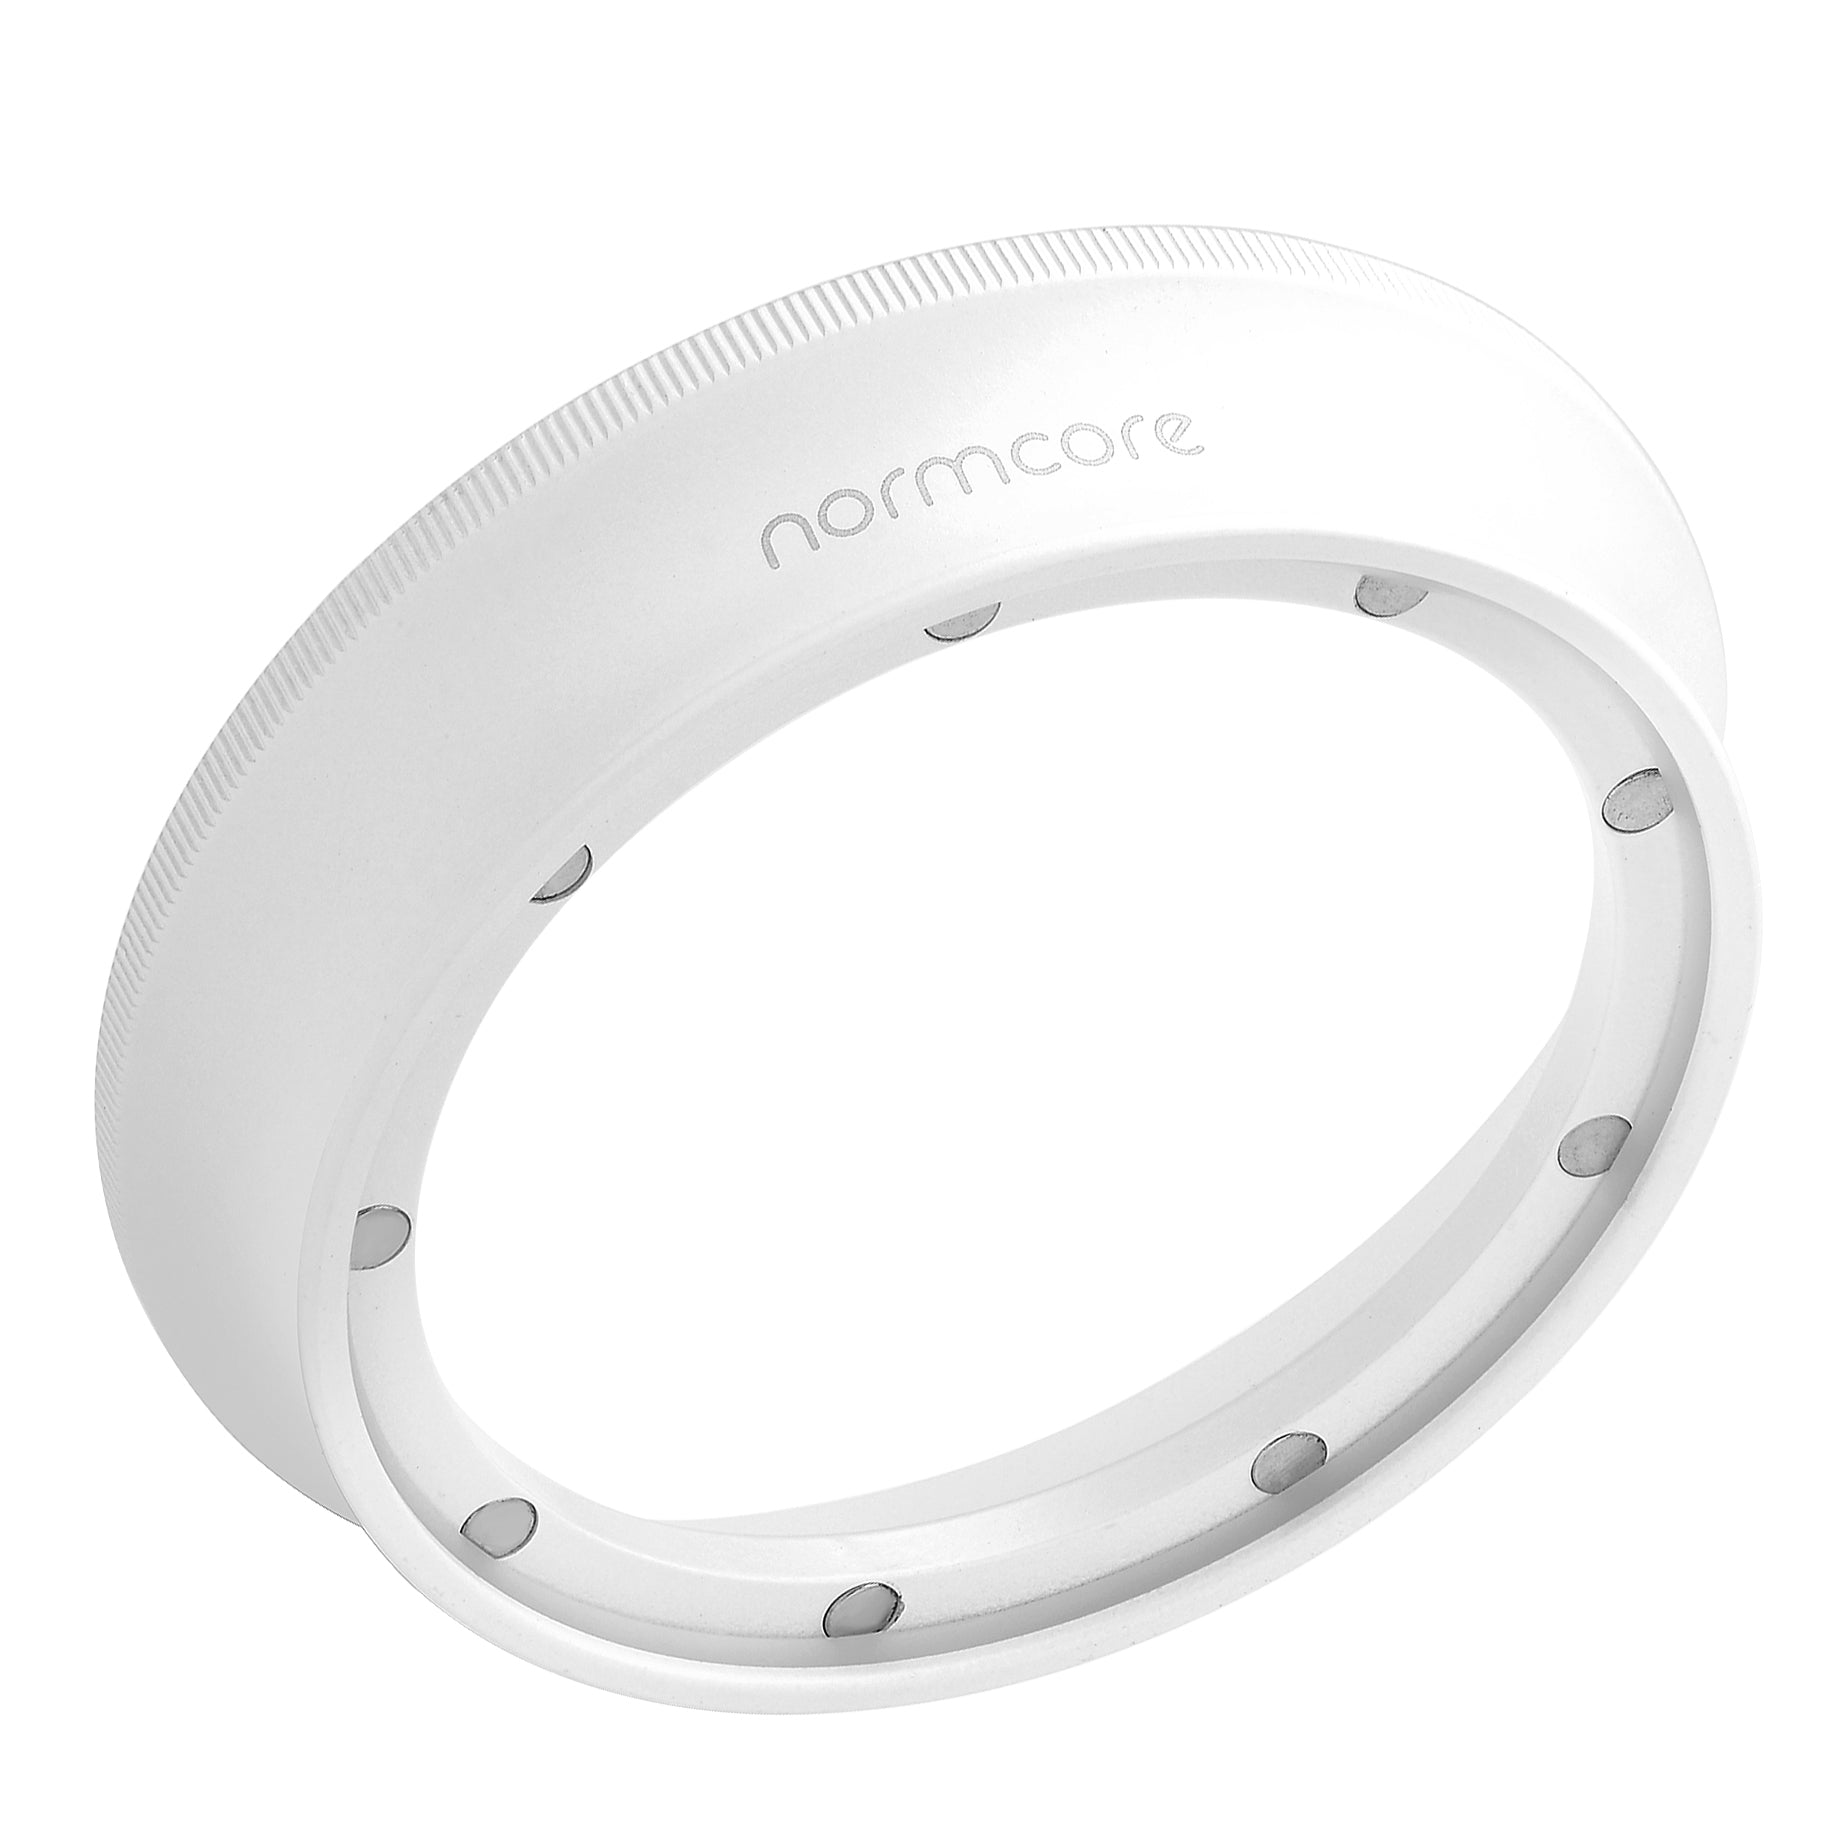 Normcore Barista Complete Essentials Kit - With Portafilter